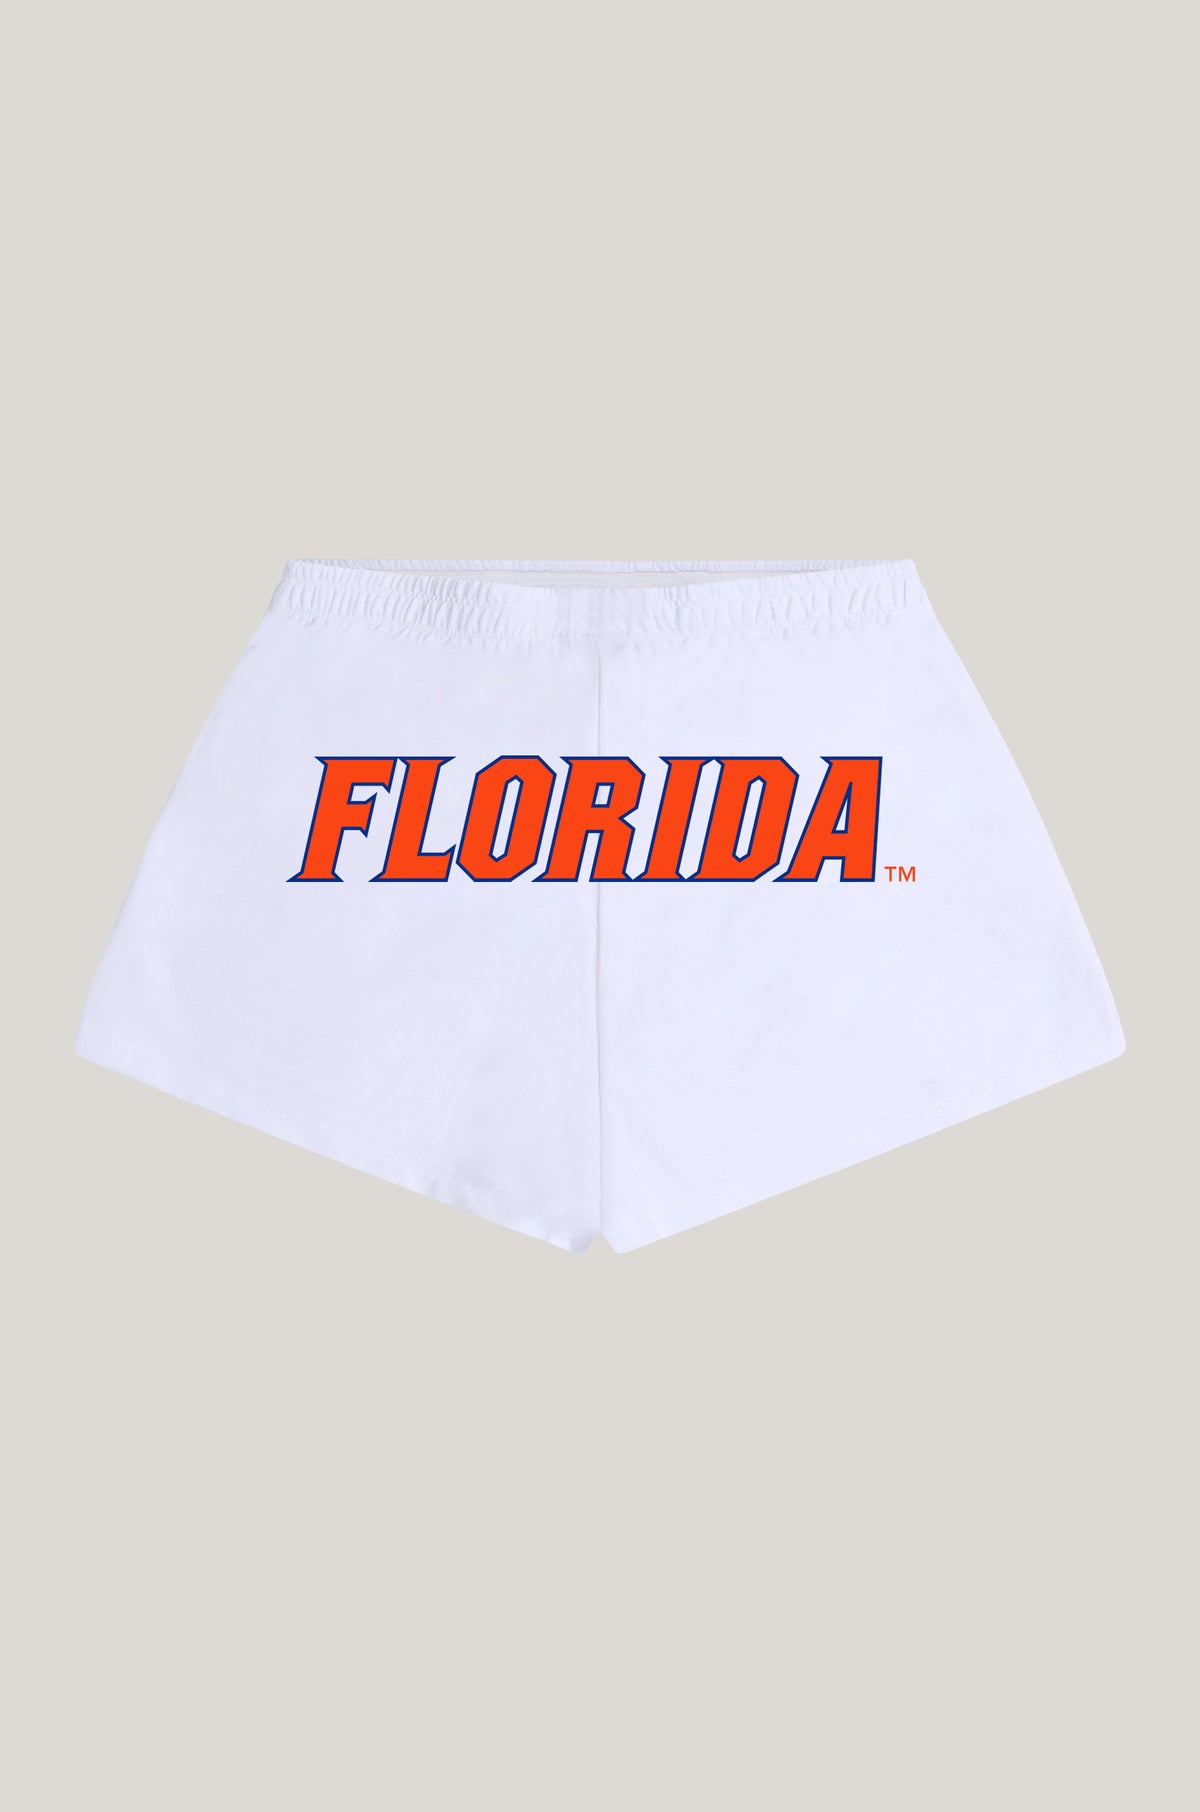 University of Florida P.E. Shorts